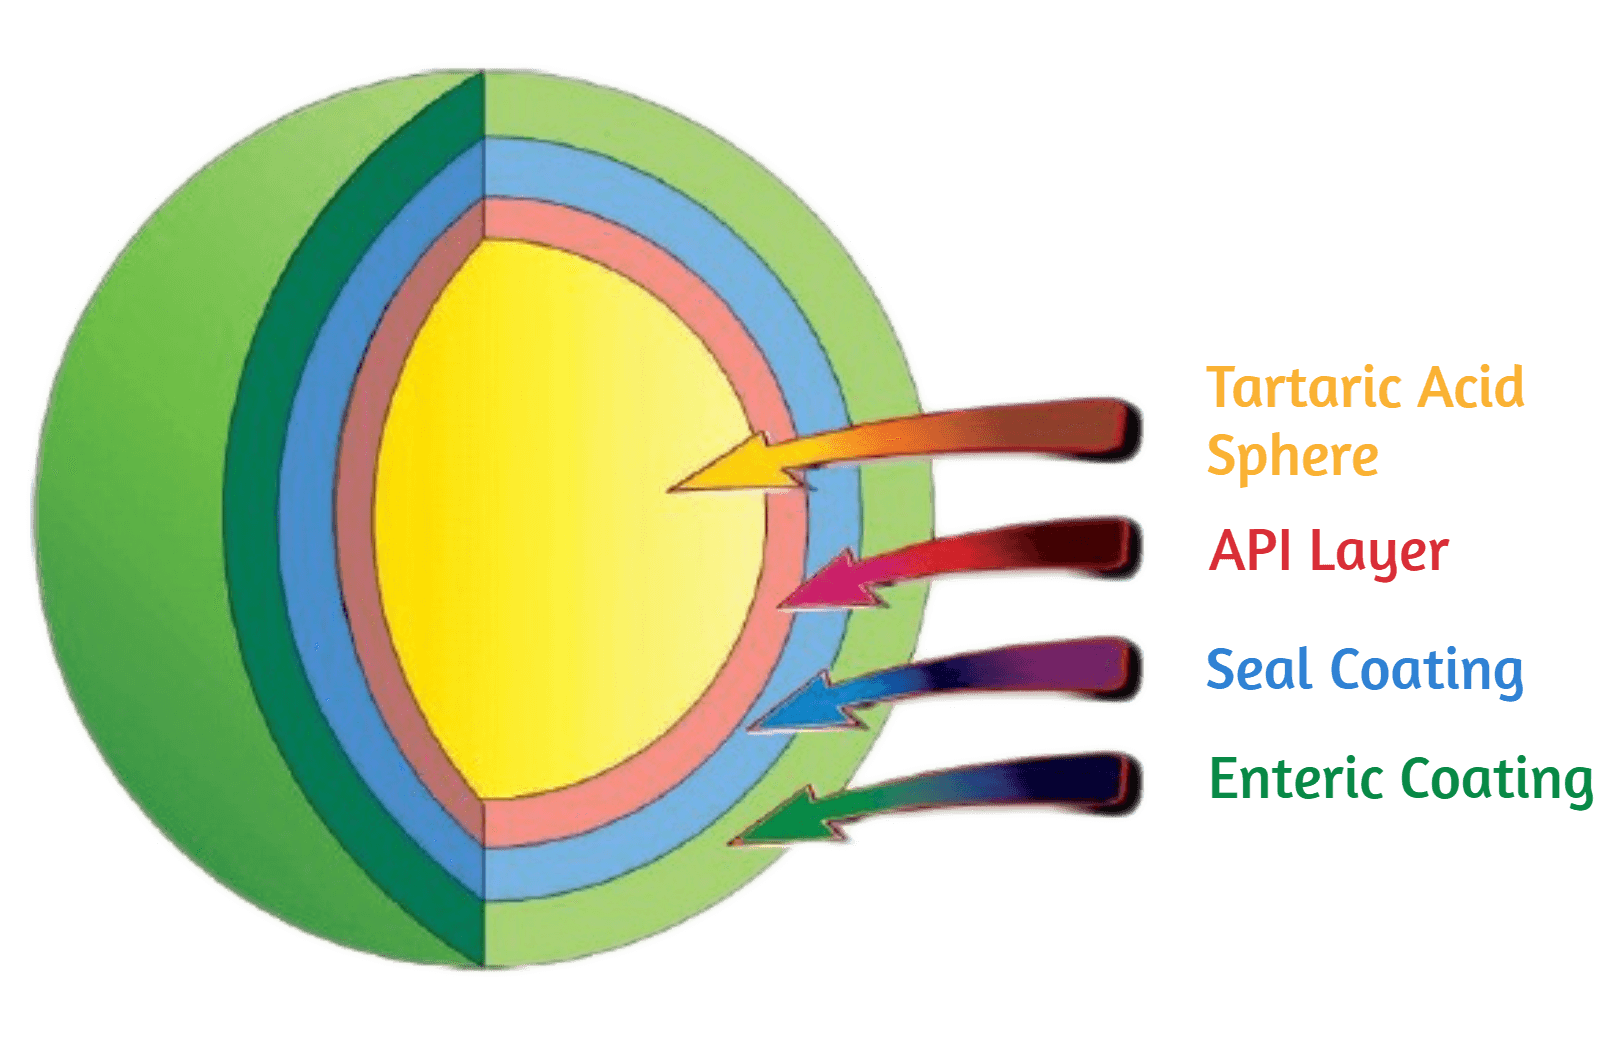 Tartaric Acid Core Sphere